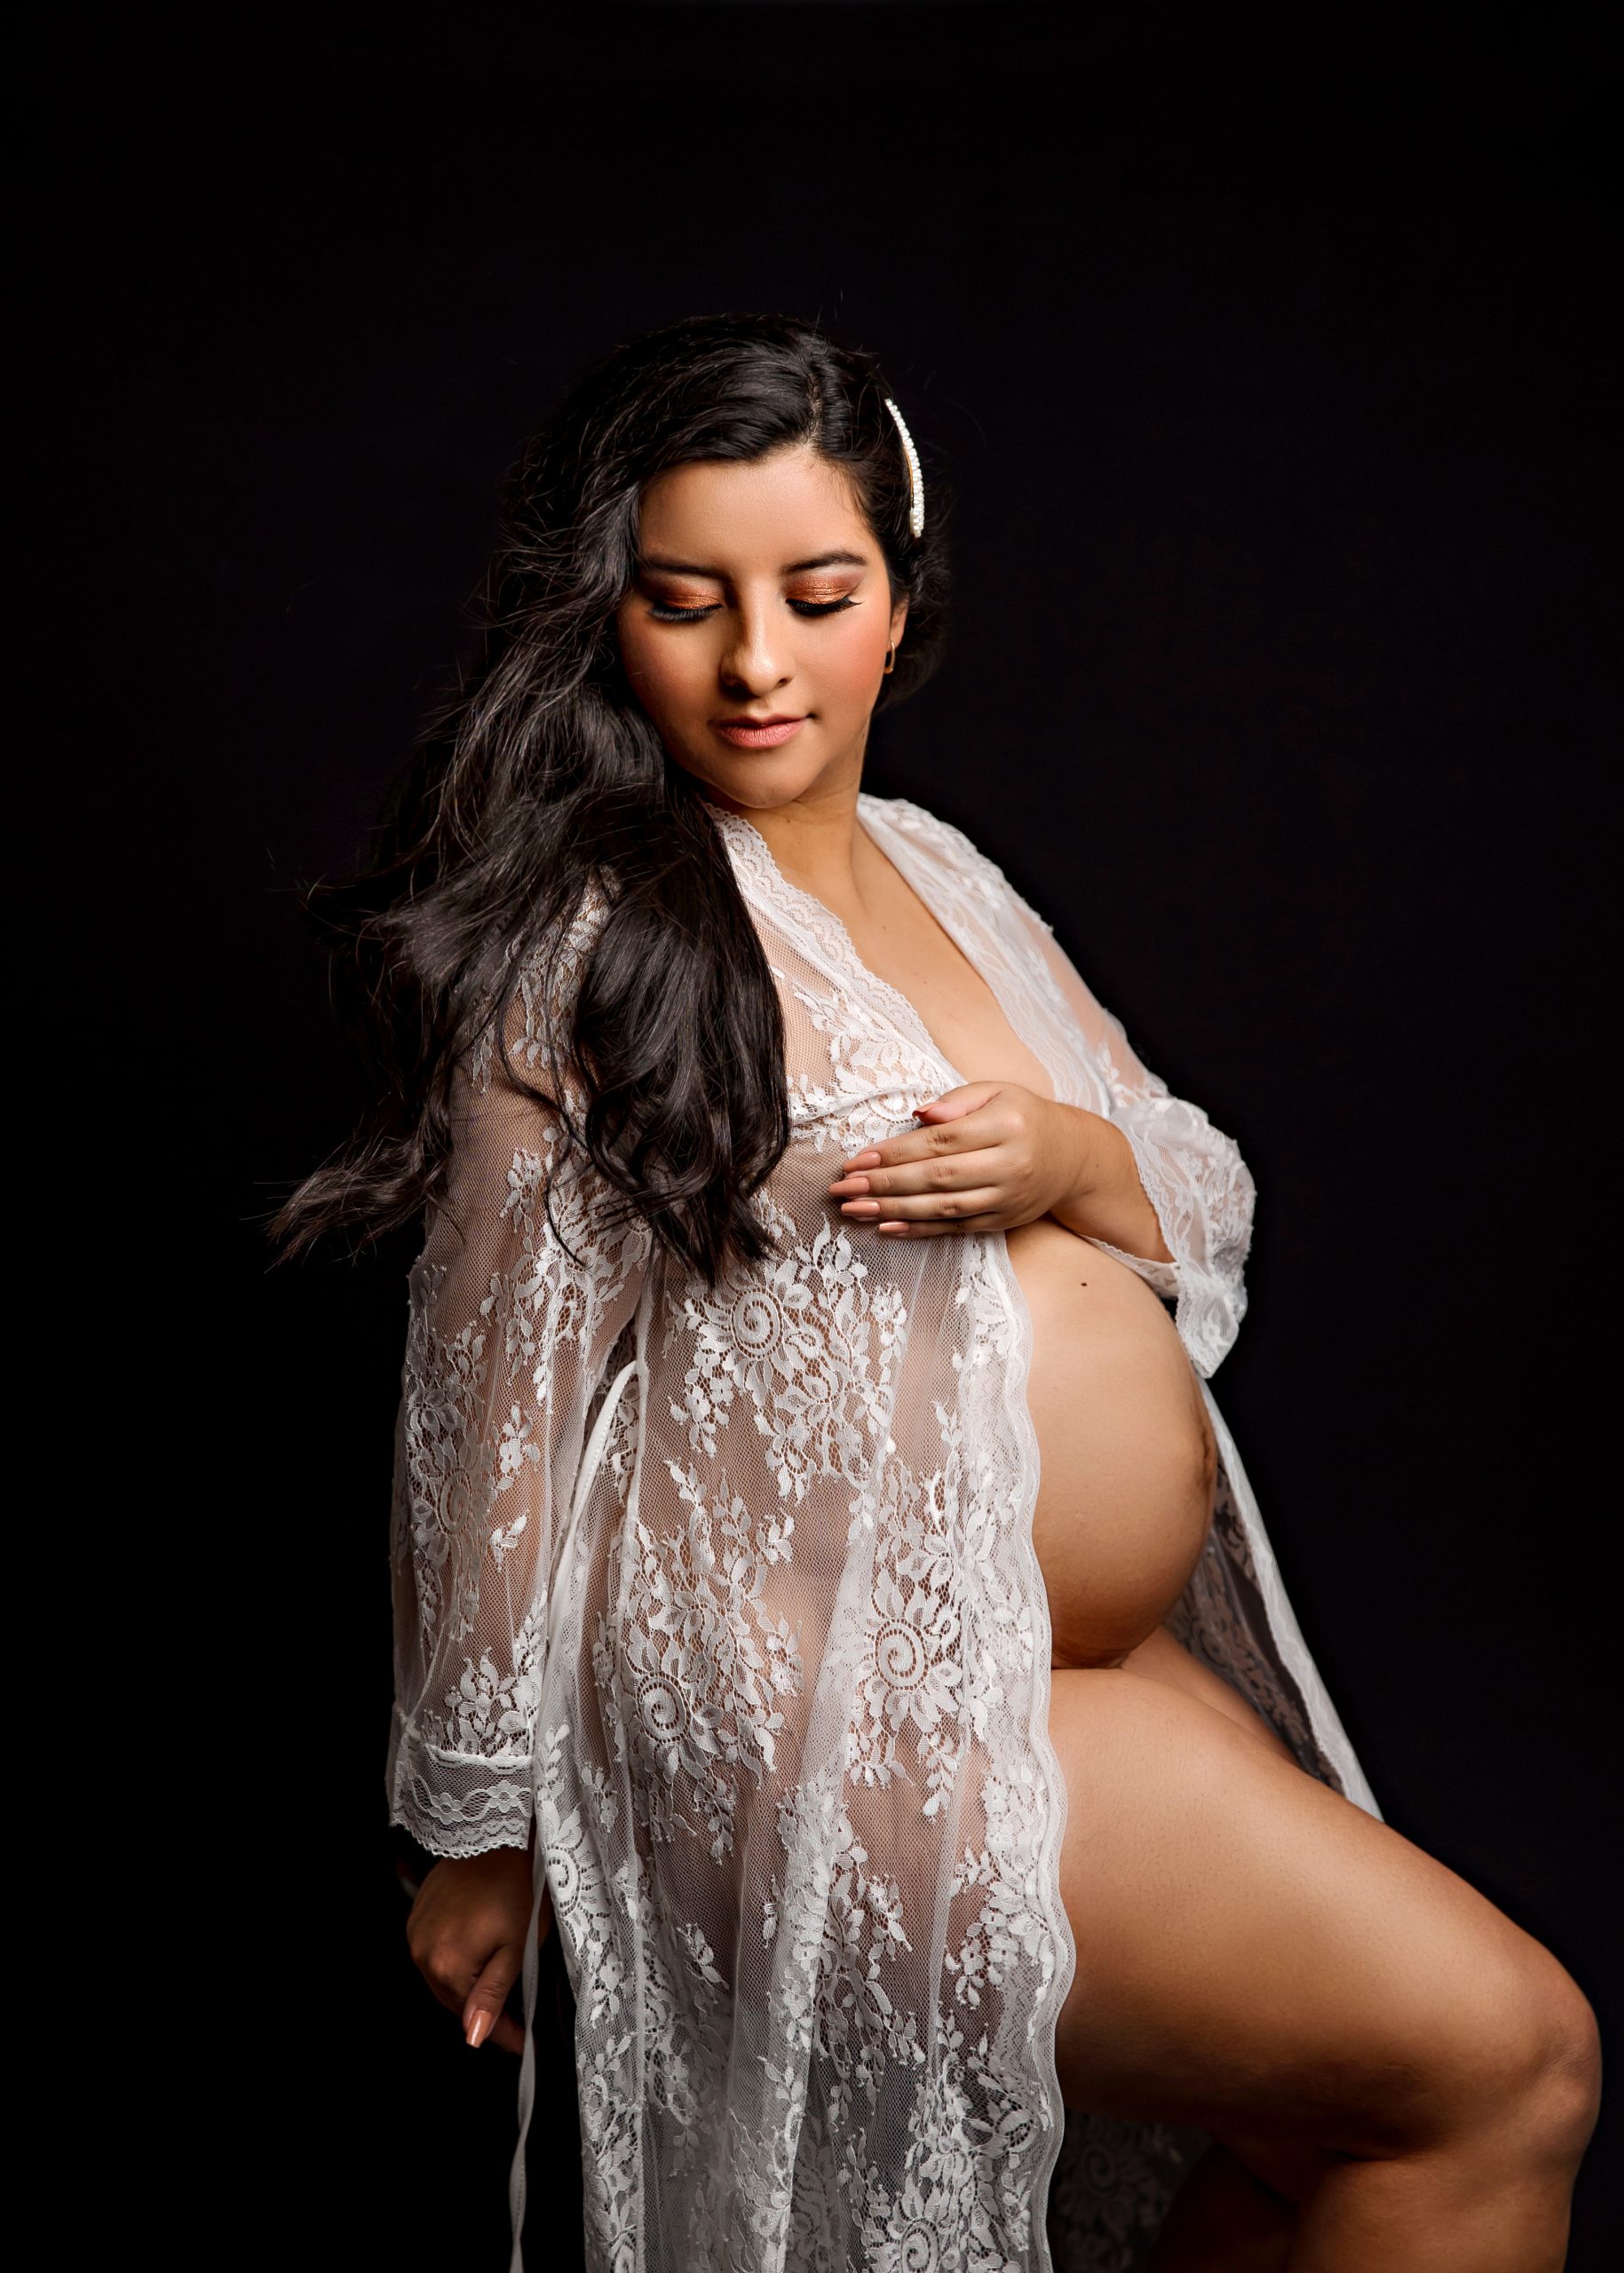 Boston maternity photography, maternity photographer near me, professional maternity photos